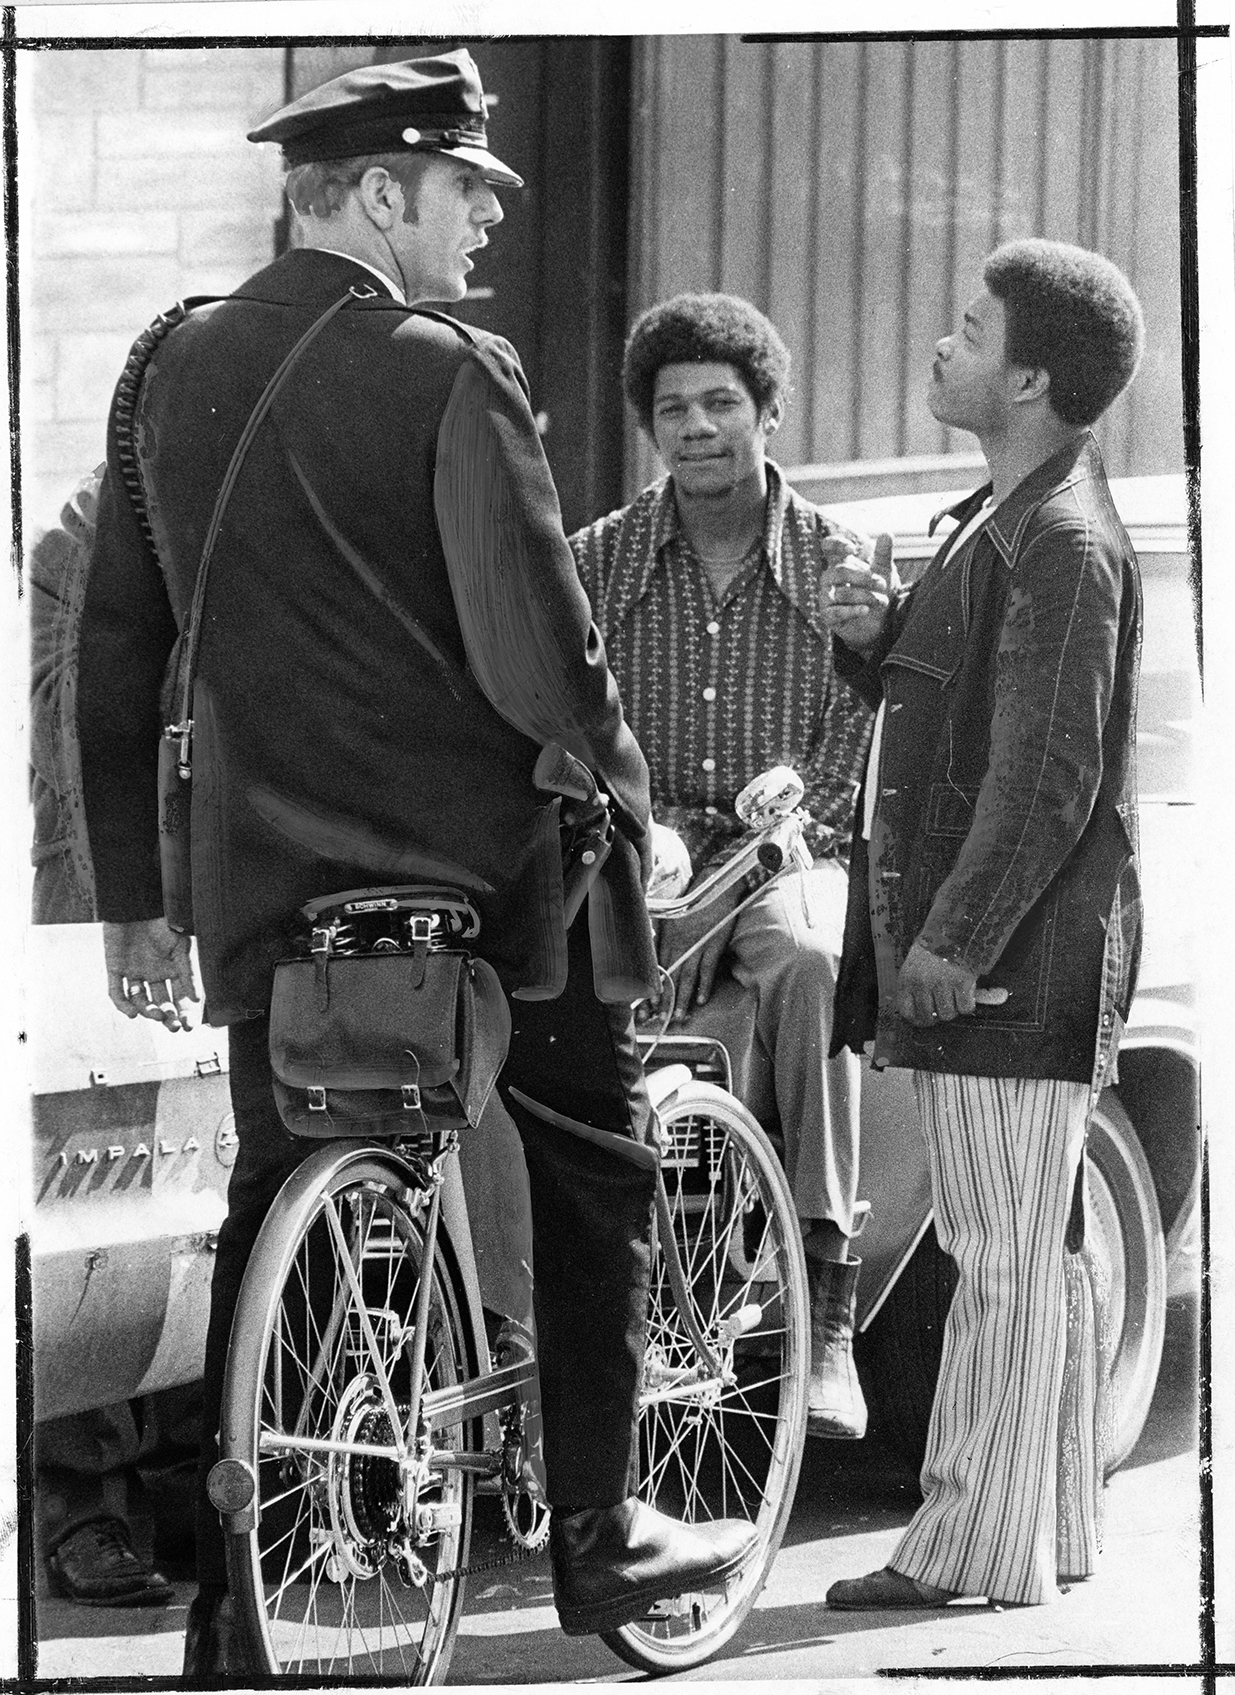 1  2 mar 1972 william tolson north ave bike patrol 1st Bike police 72